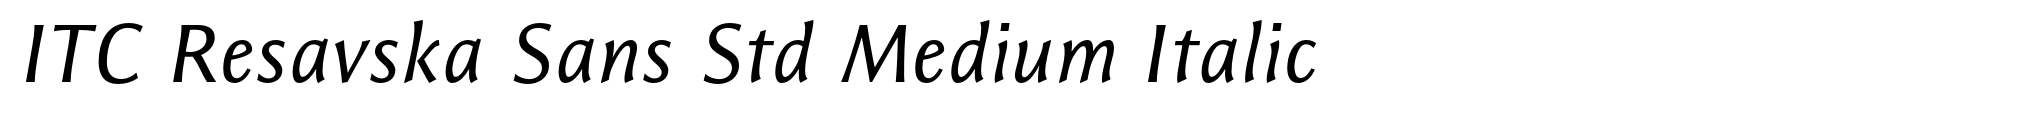 ITC Resavska Sans Std Medium Italic image